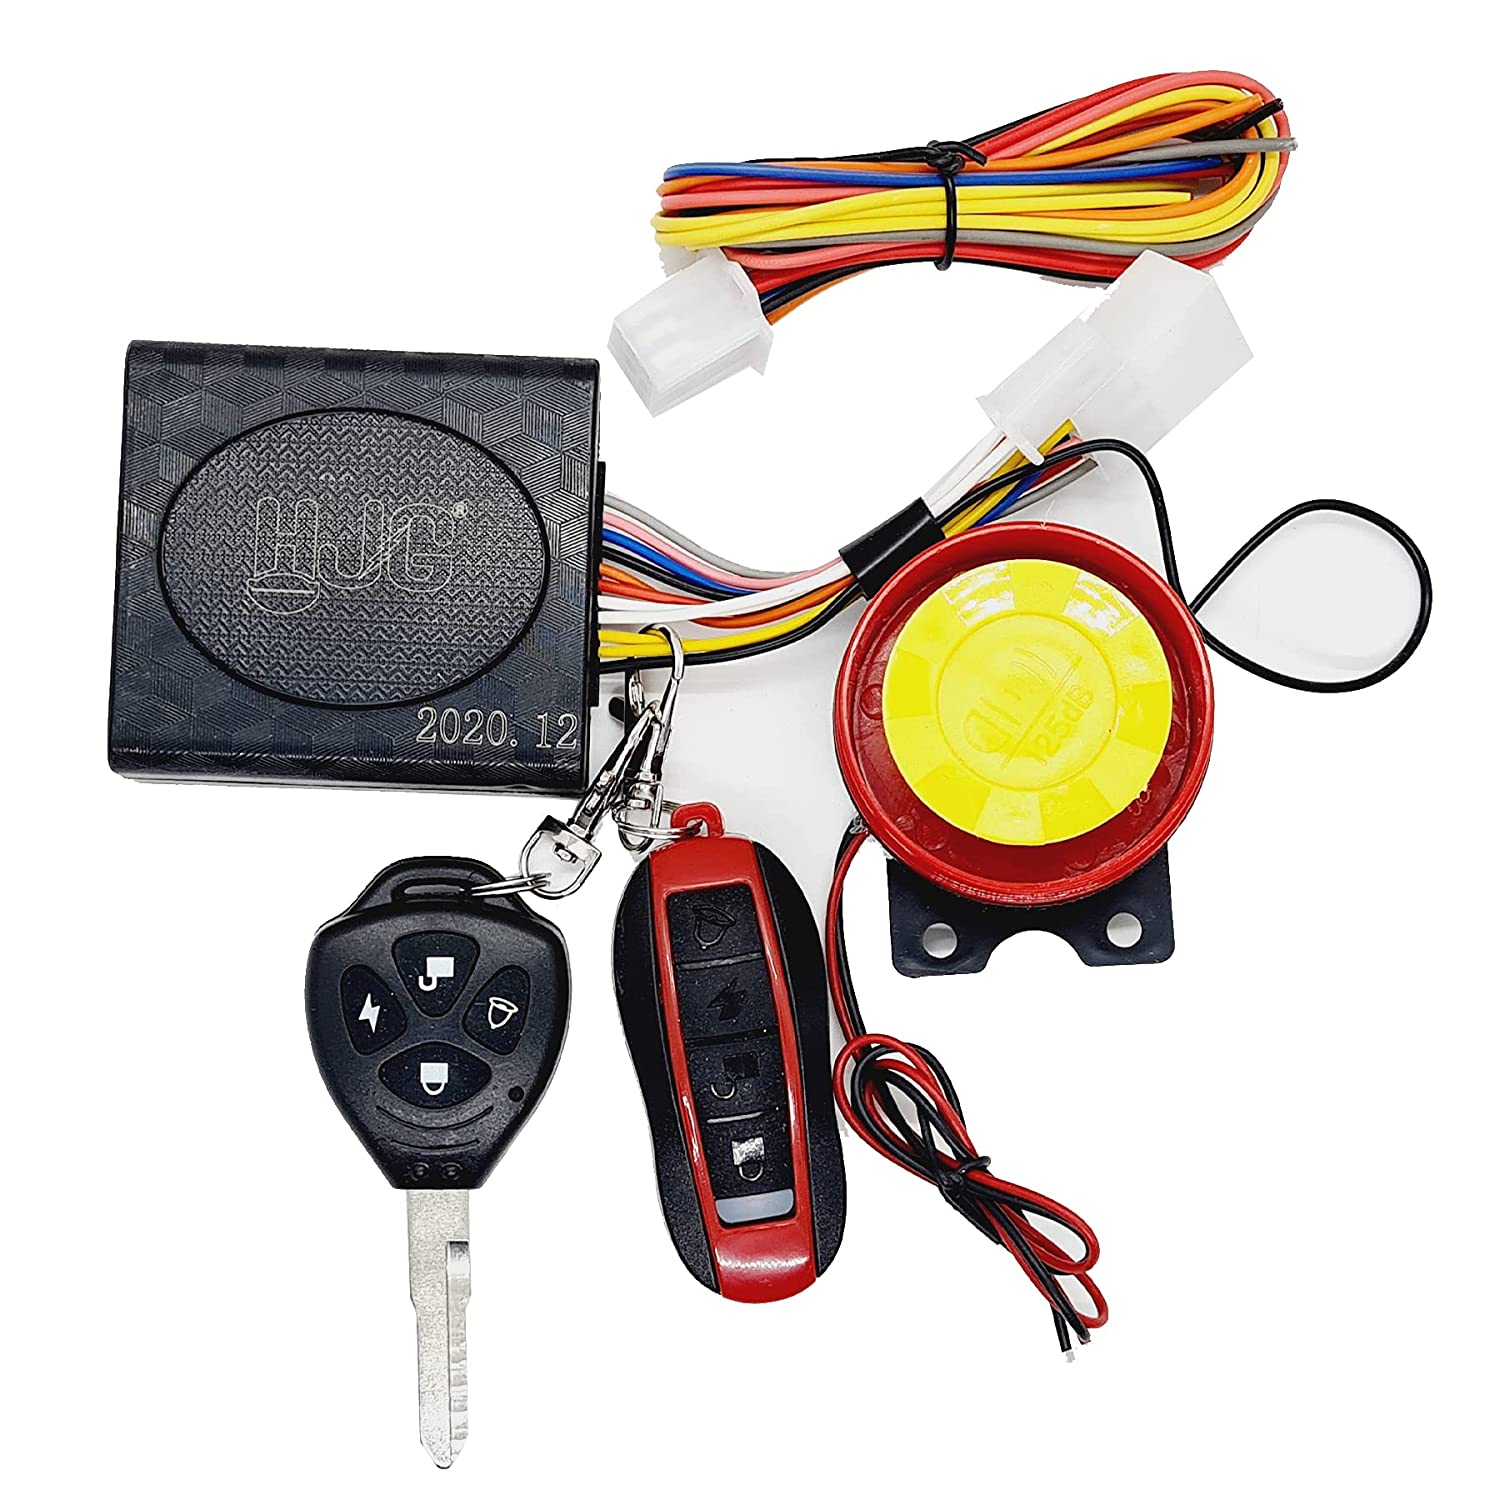 Bike Alarm Kit - Premium Alarm Kit from Sparewick - Just Rs. 950! Shop now at Sparewick